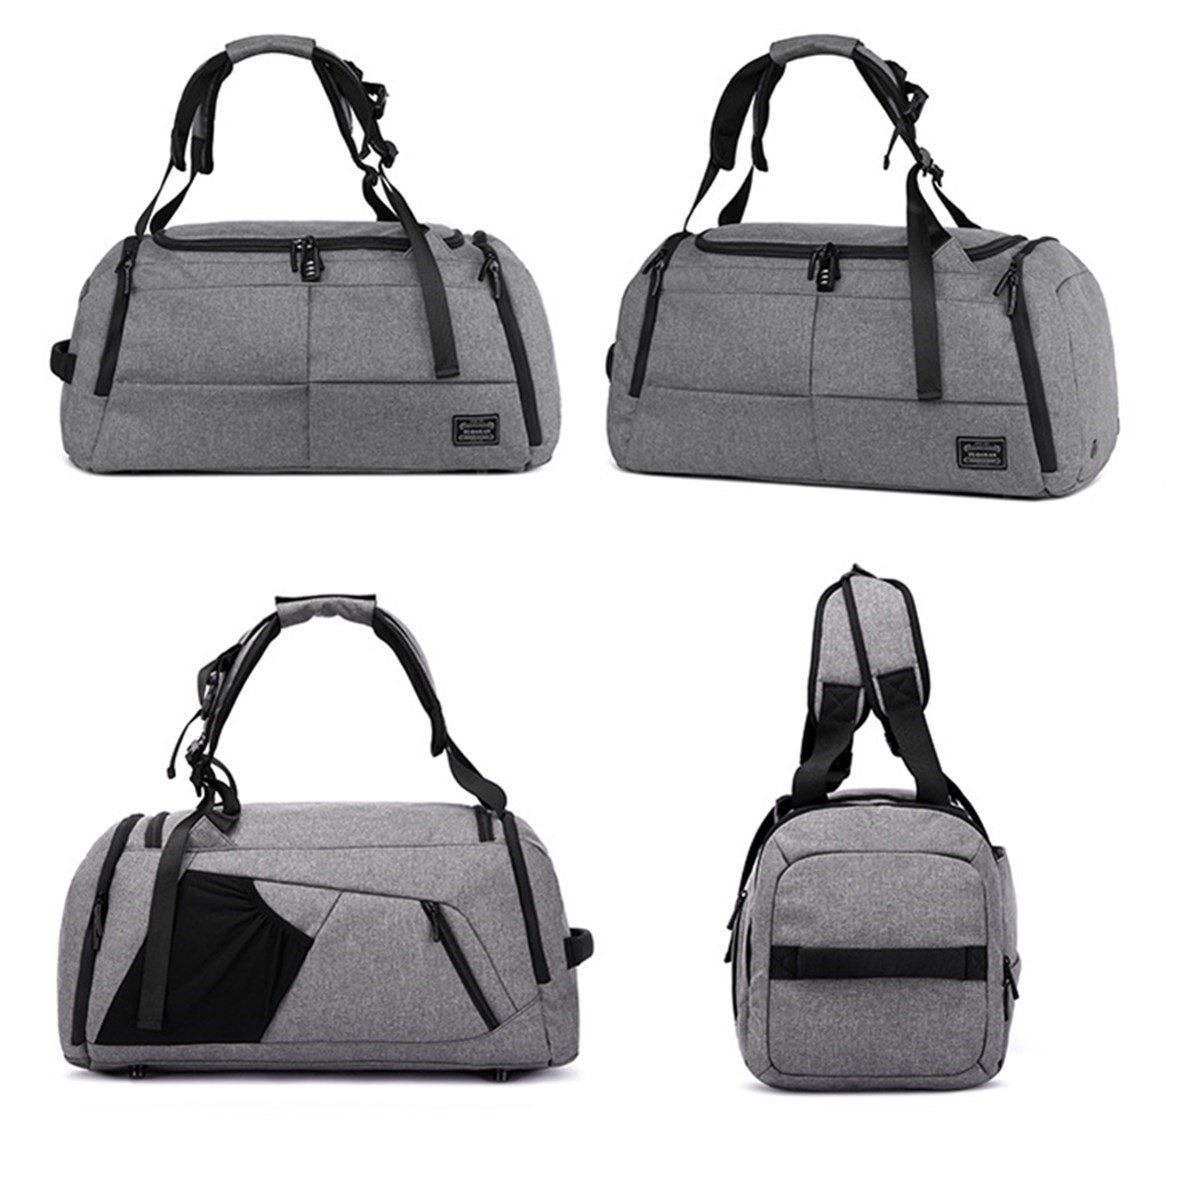 Outdoor-Men-Women-Luggage-Travel-Bag-Satchel-Shoulder-Gym-Sports-Handbag-with-Shoes-Storage-1279187-5